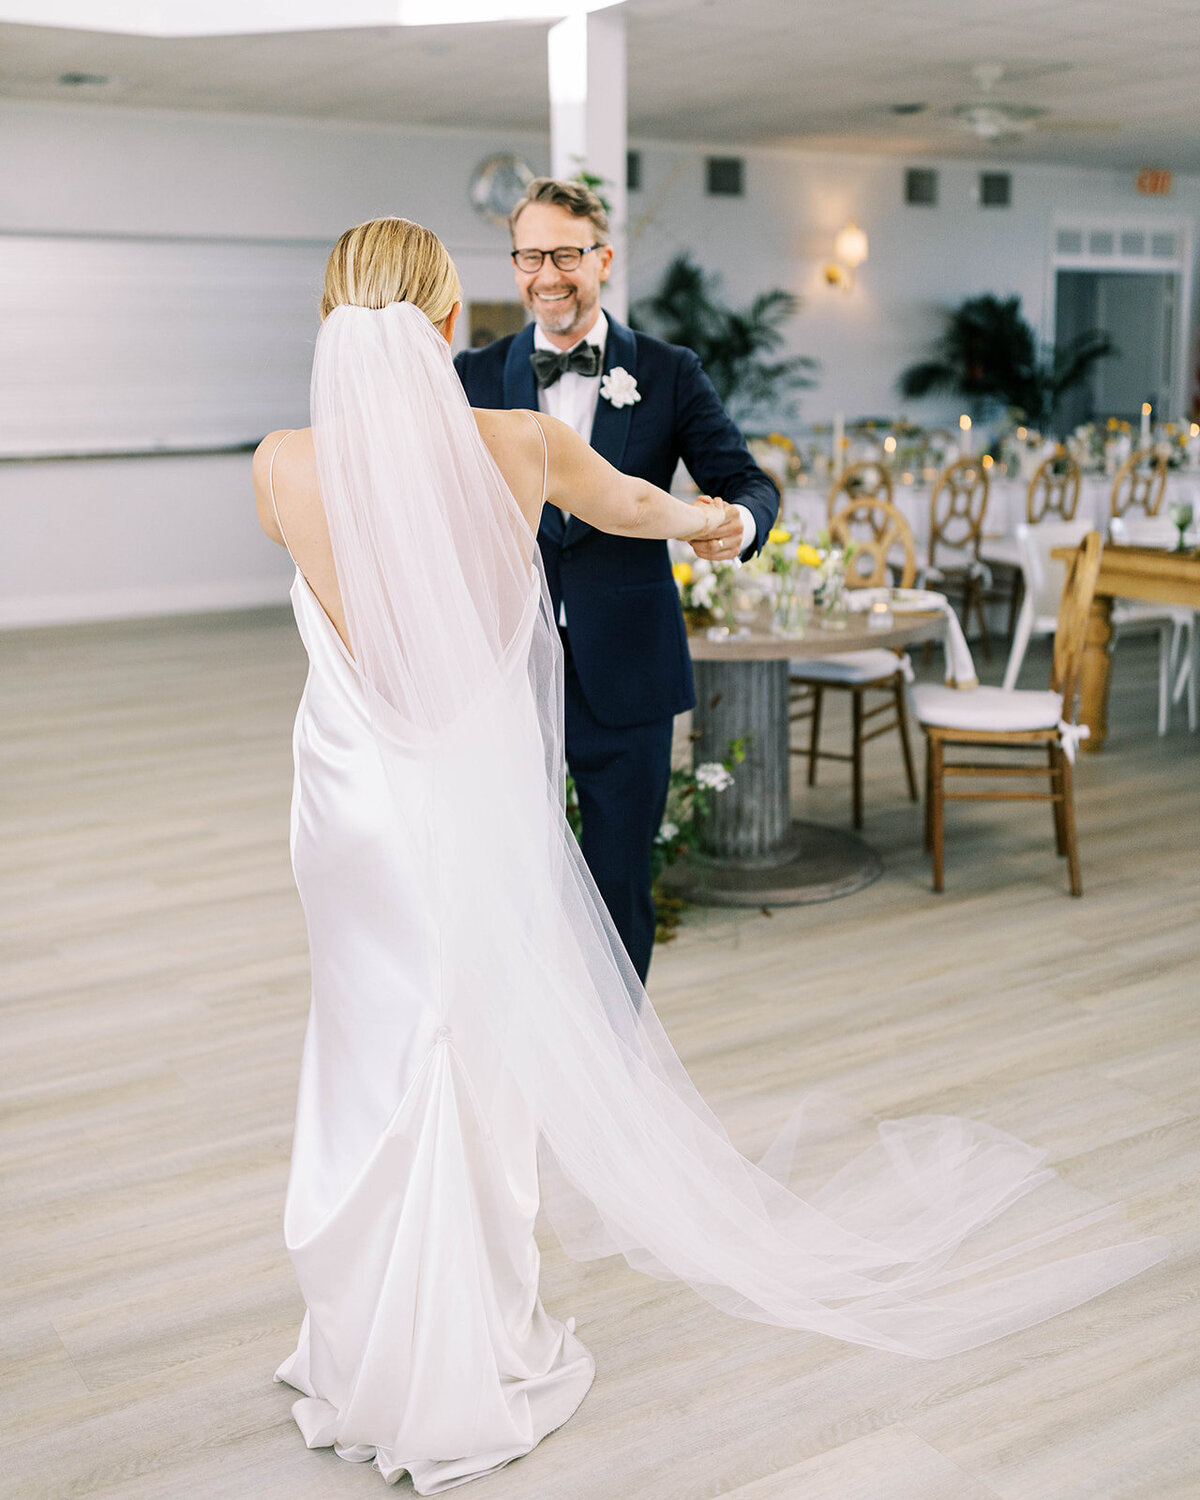 tess & DB - bride & groom - Chrissy O_Neill & Co. - South Florida Wedding Photographer-153